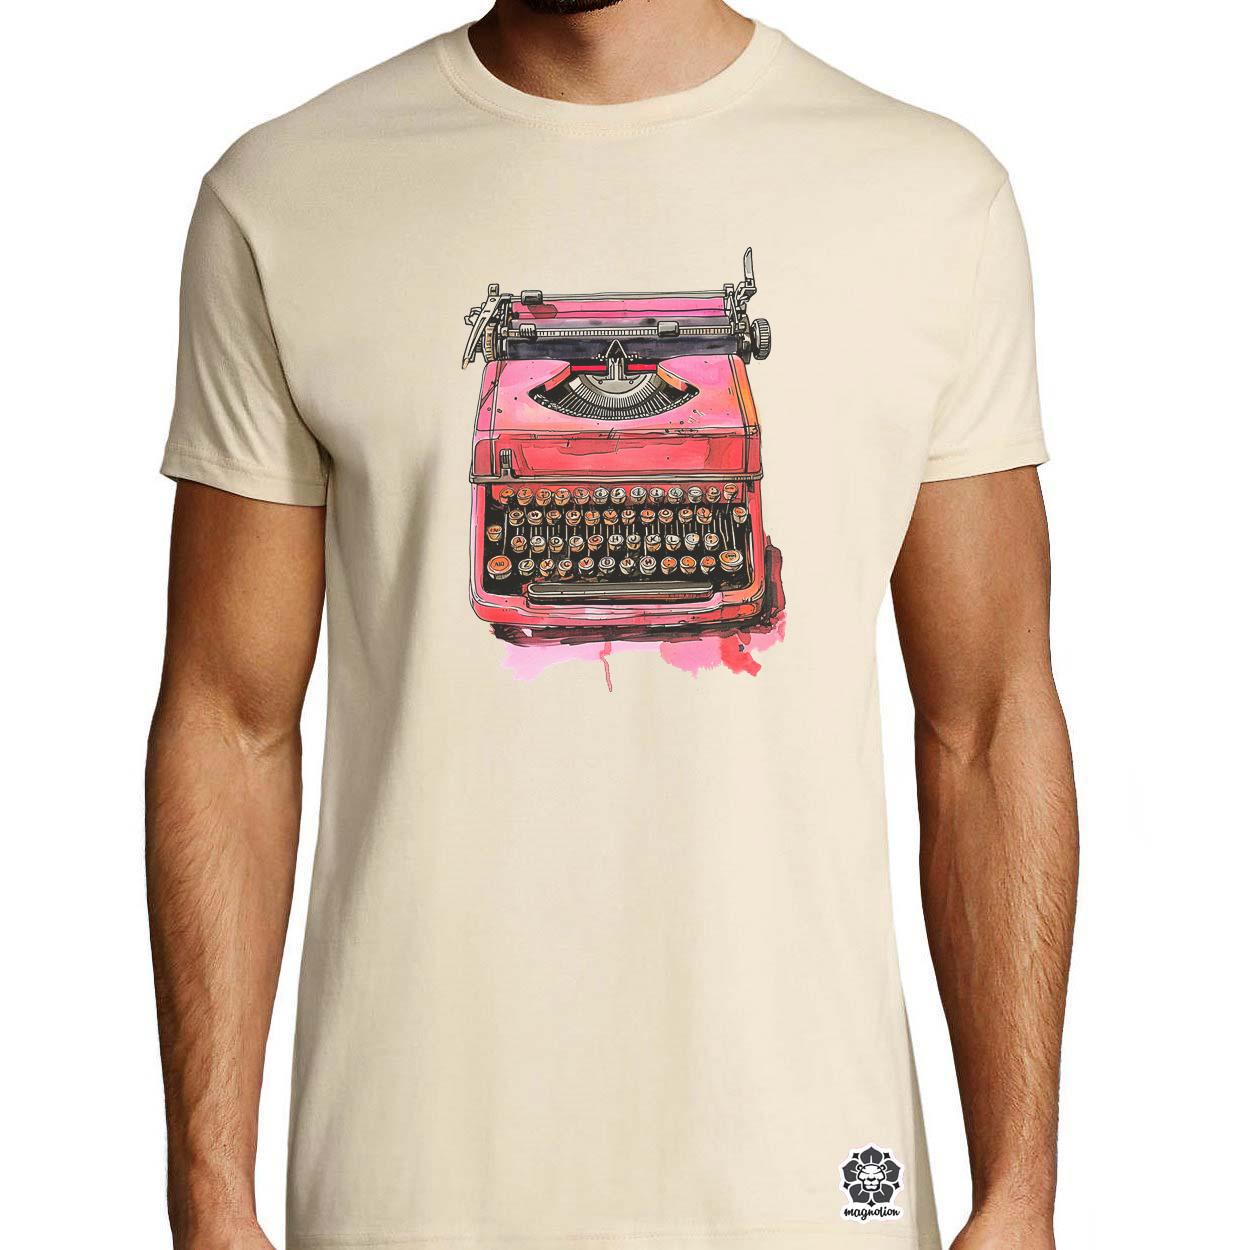 Vintage pink írógép